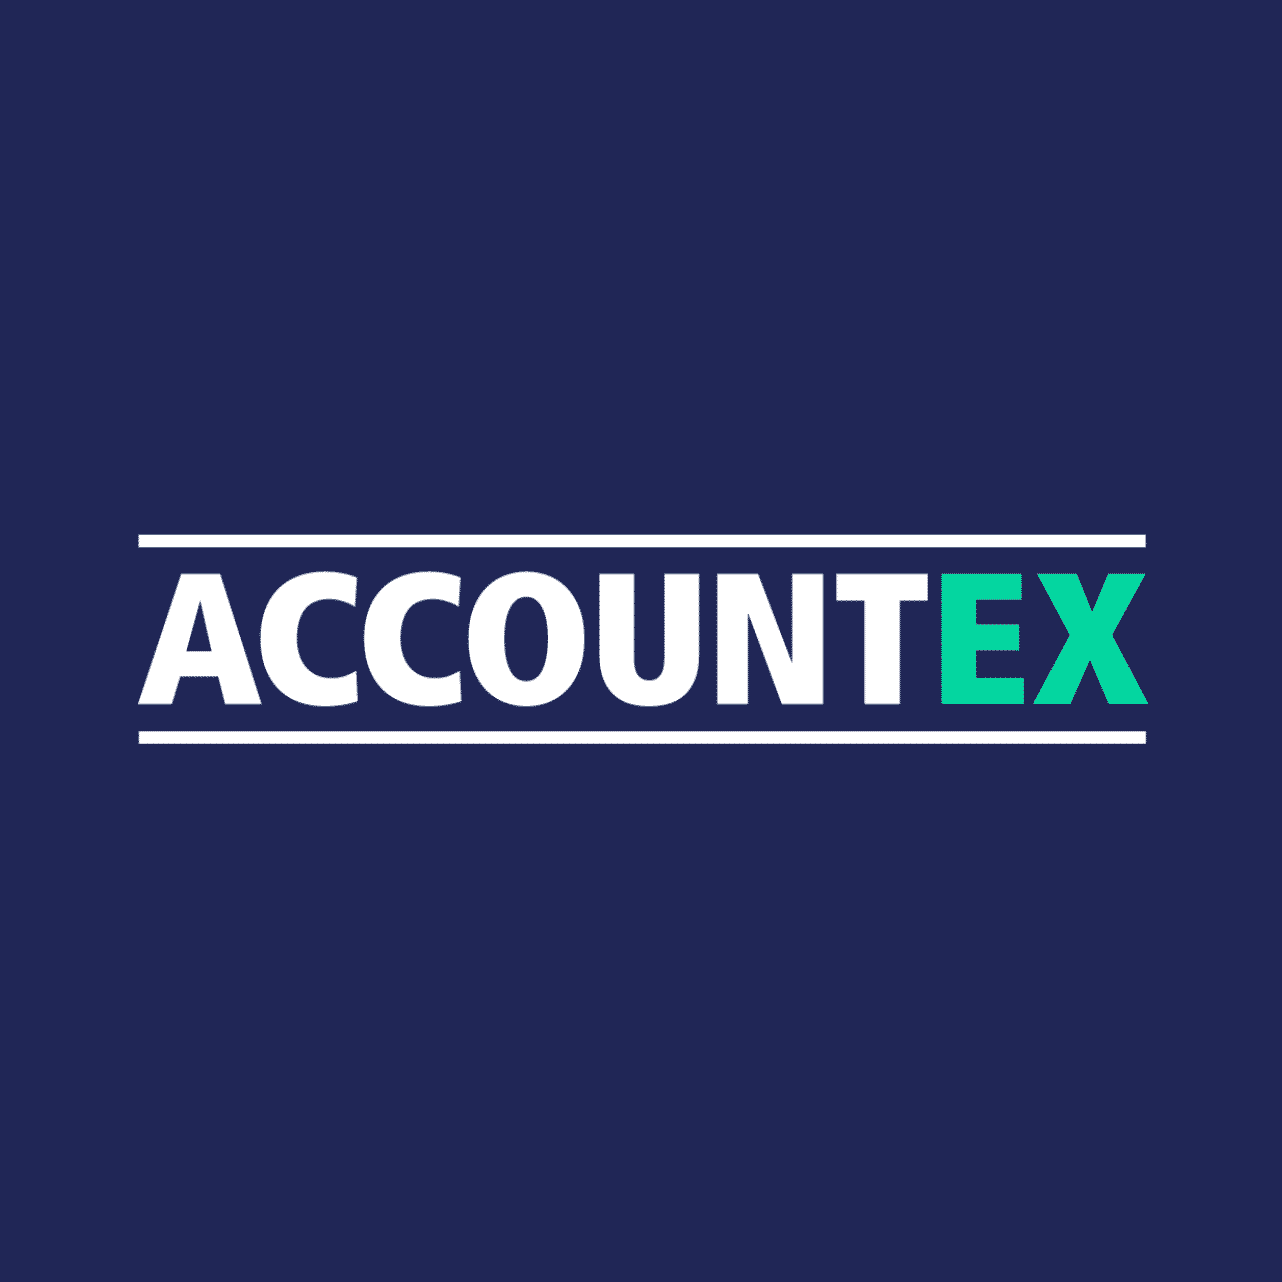 Accountex